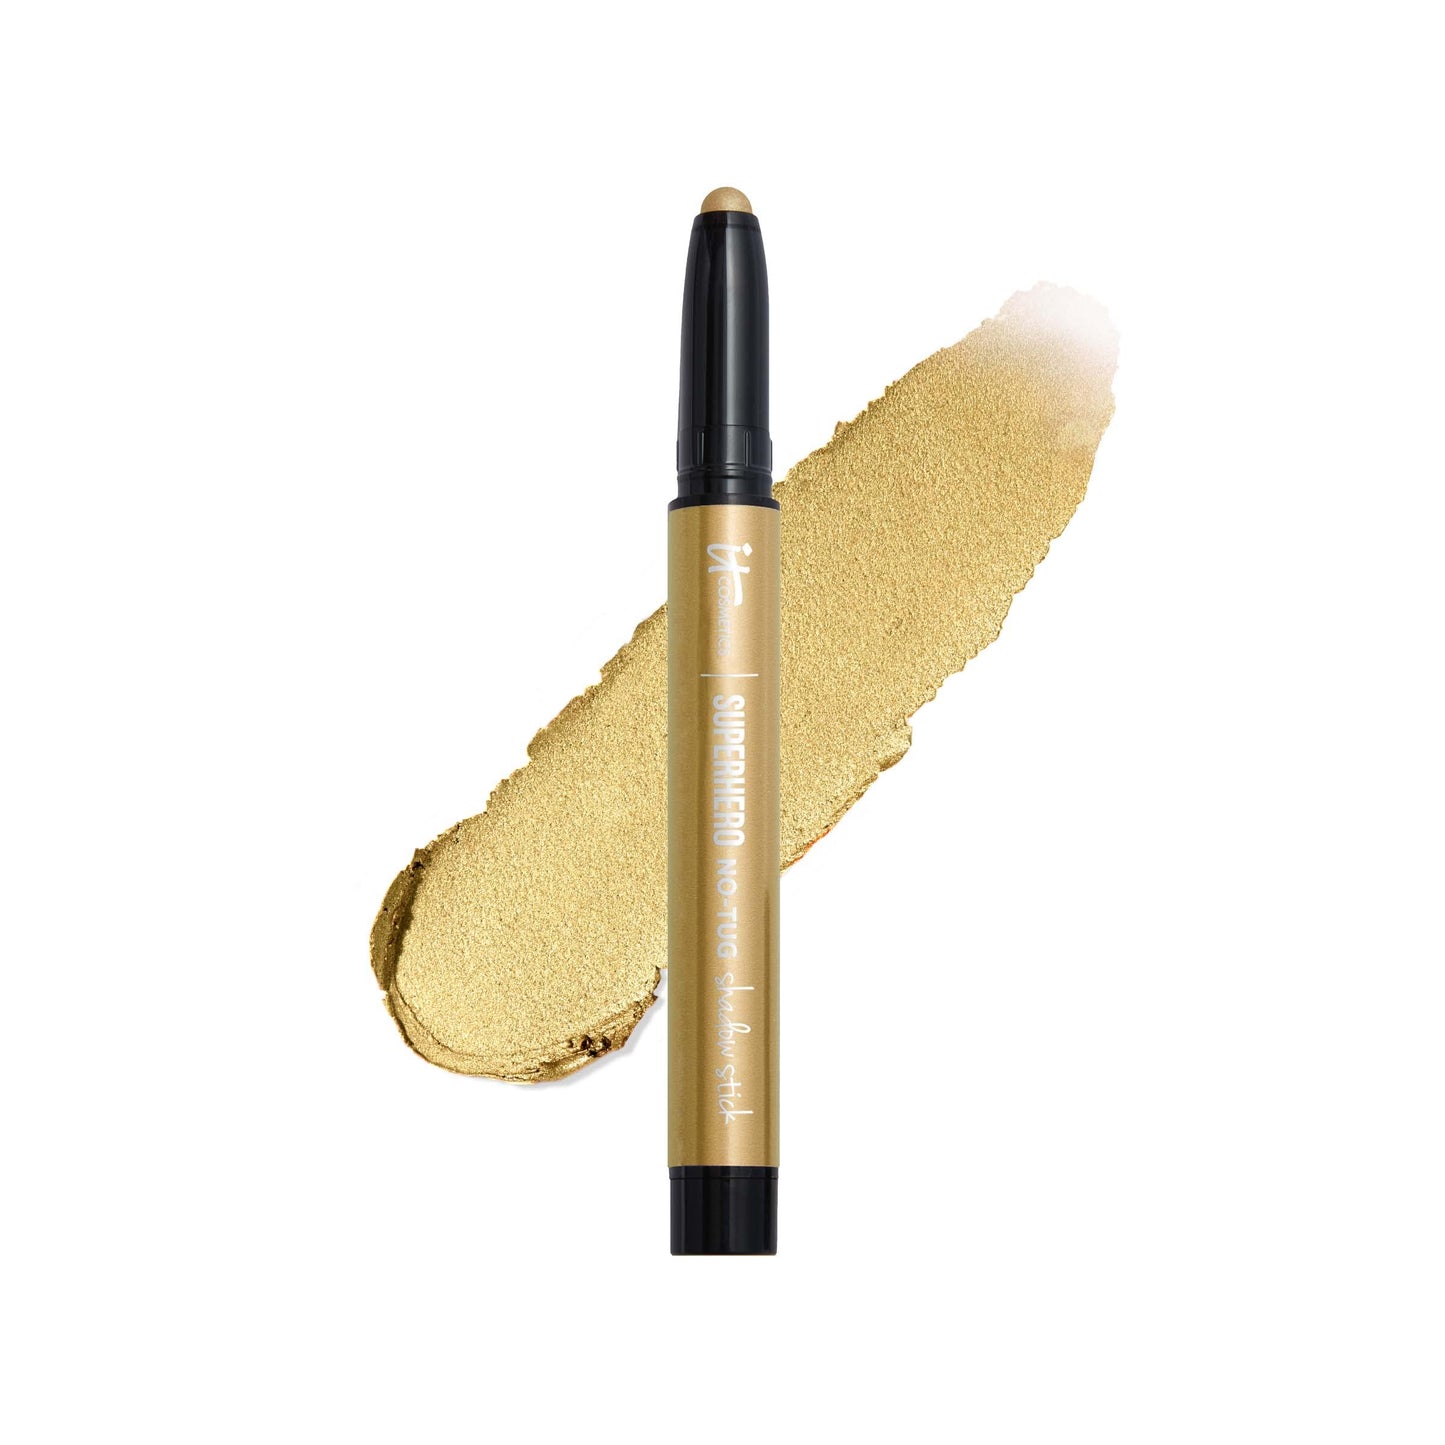 IT Cosmetics Superhero No-Tug Waterproof Eyeshadow Stick, Gallant Gold - Rich Yellow Gold - Longwear, Blendable Cream Eyeshadow with Built-In Primer - Suitable for Sensitive Eyes - 0.05 oz